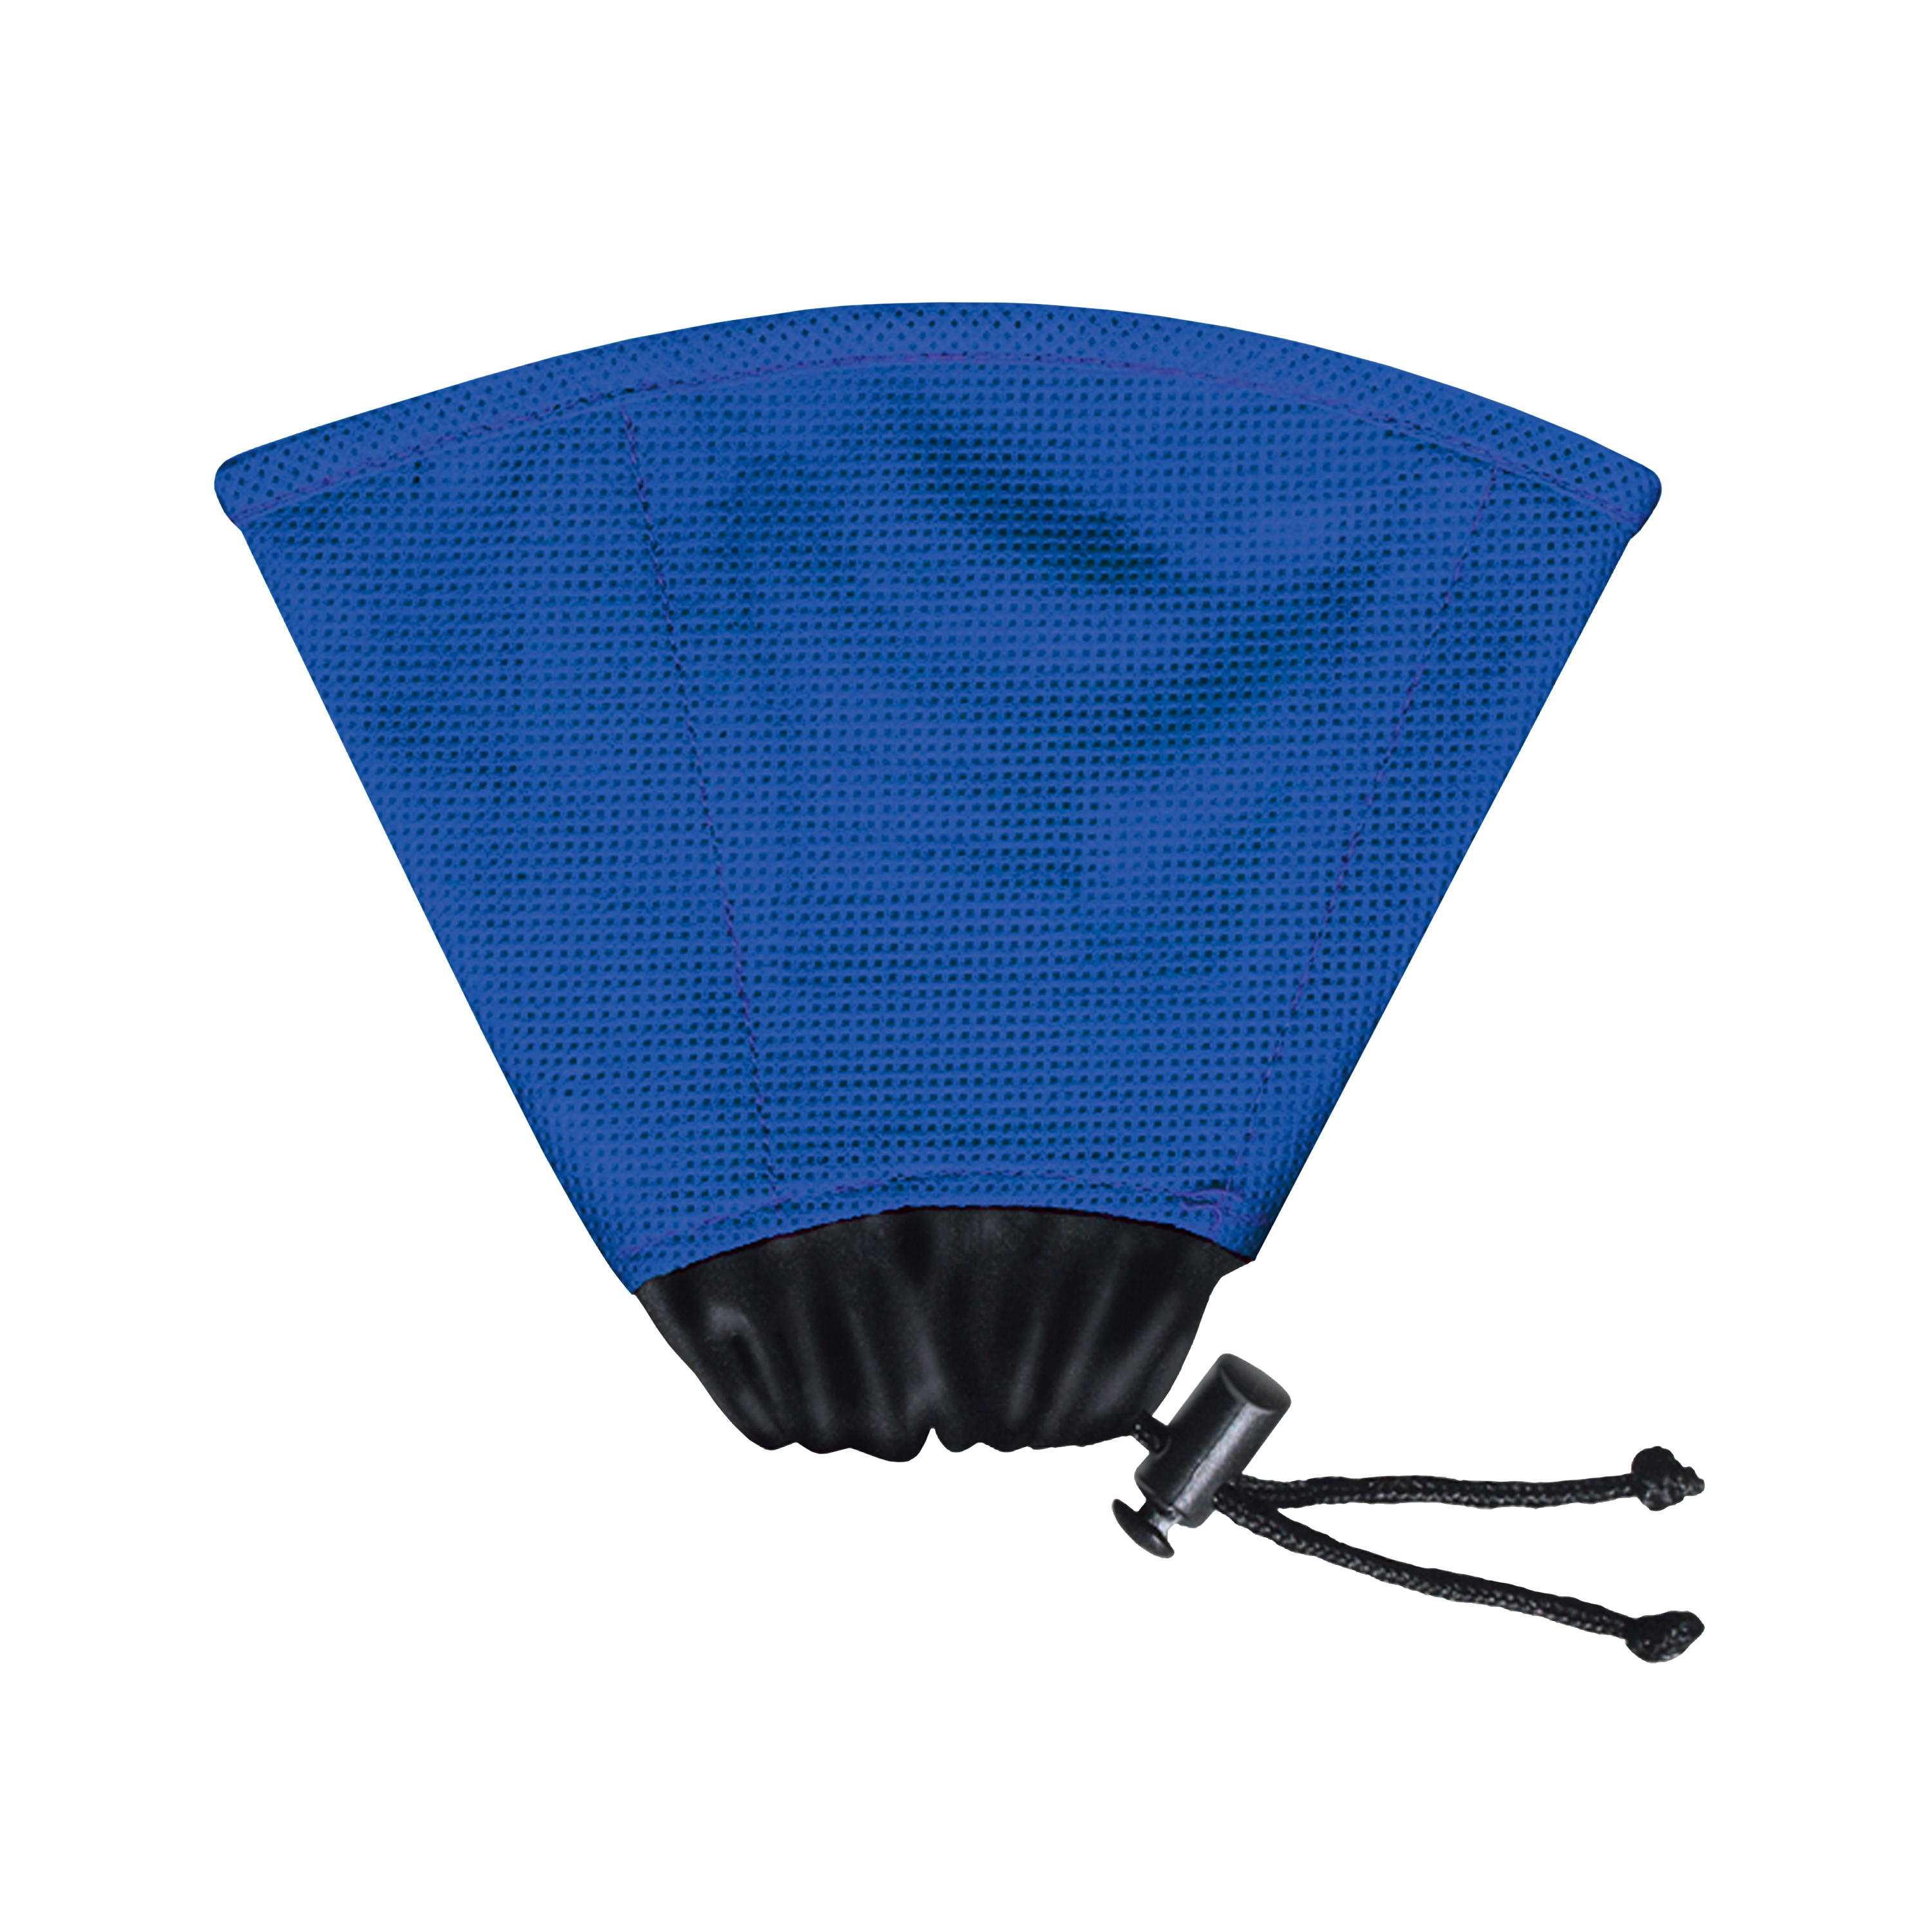 E-halsbånd|kraver EZ Soft offpack produktbillede